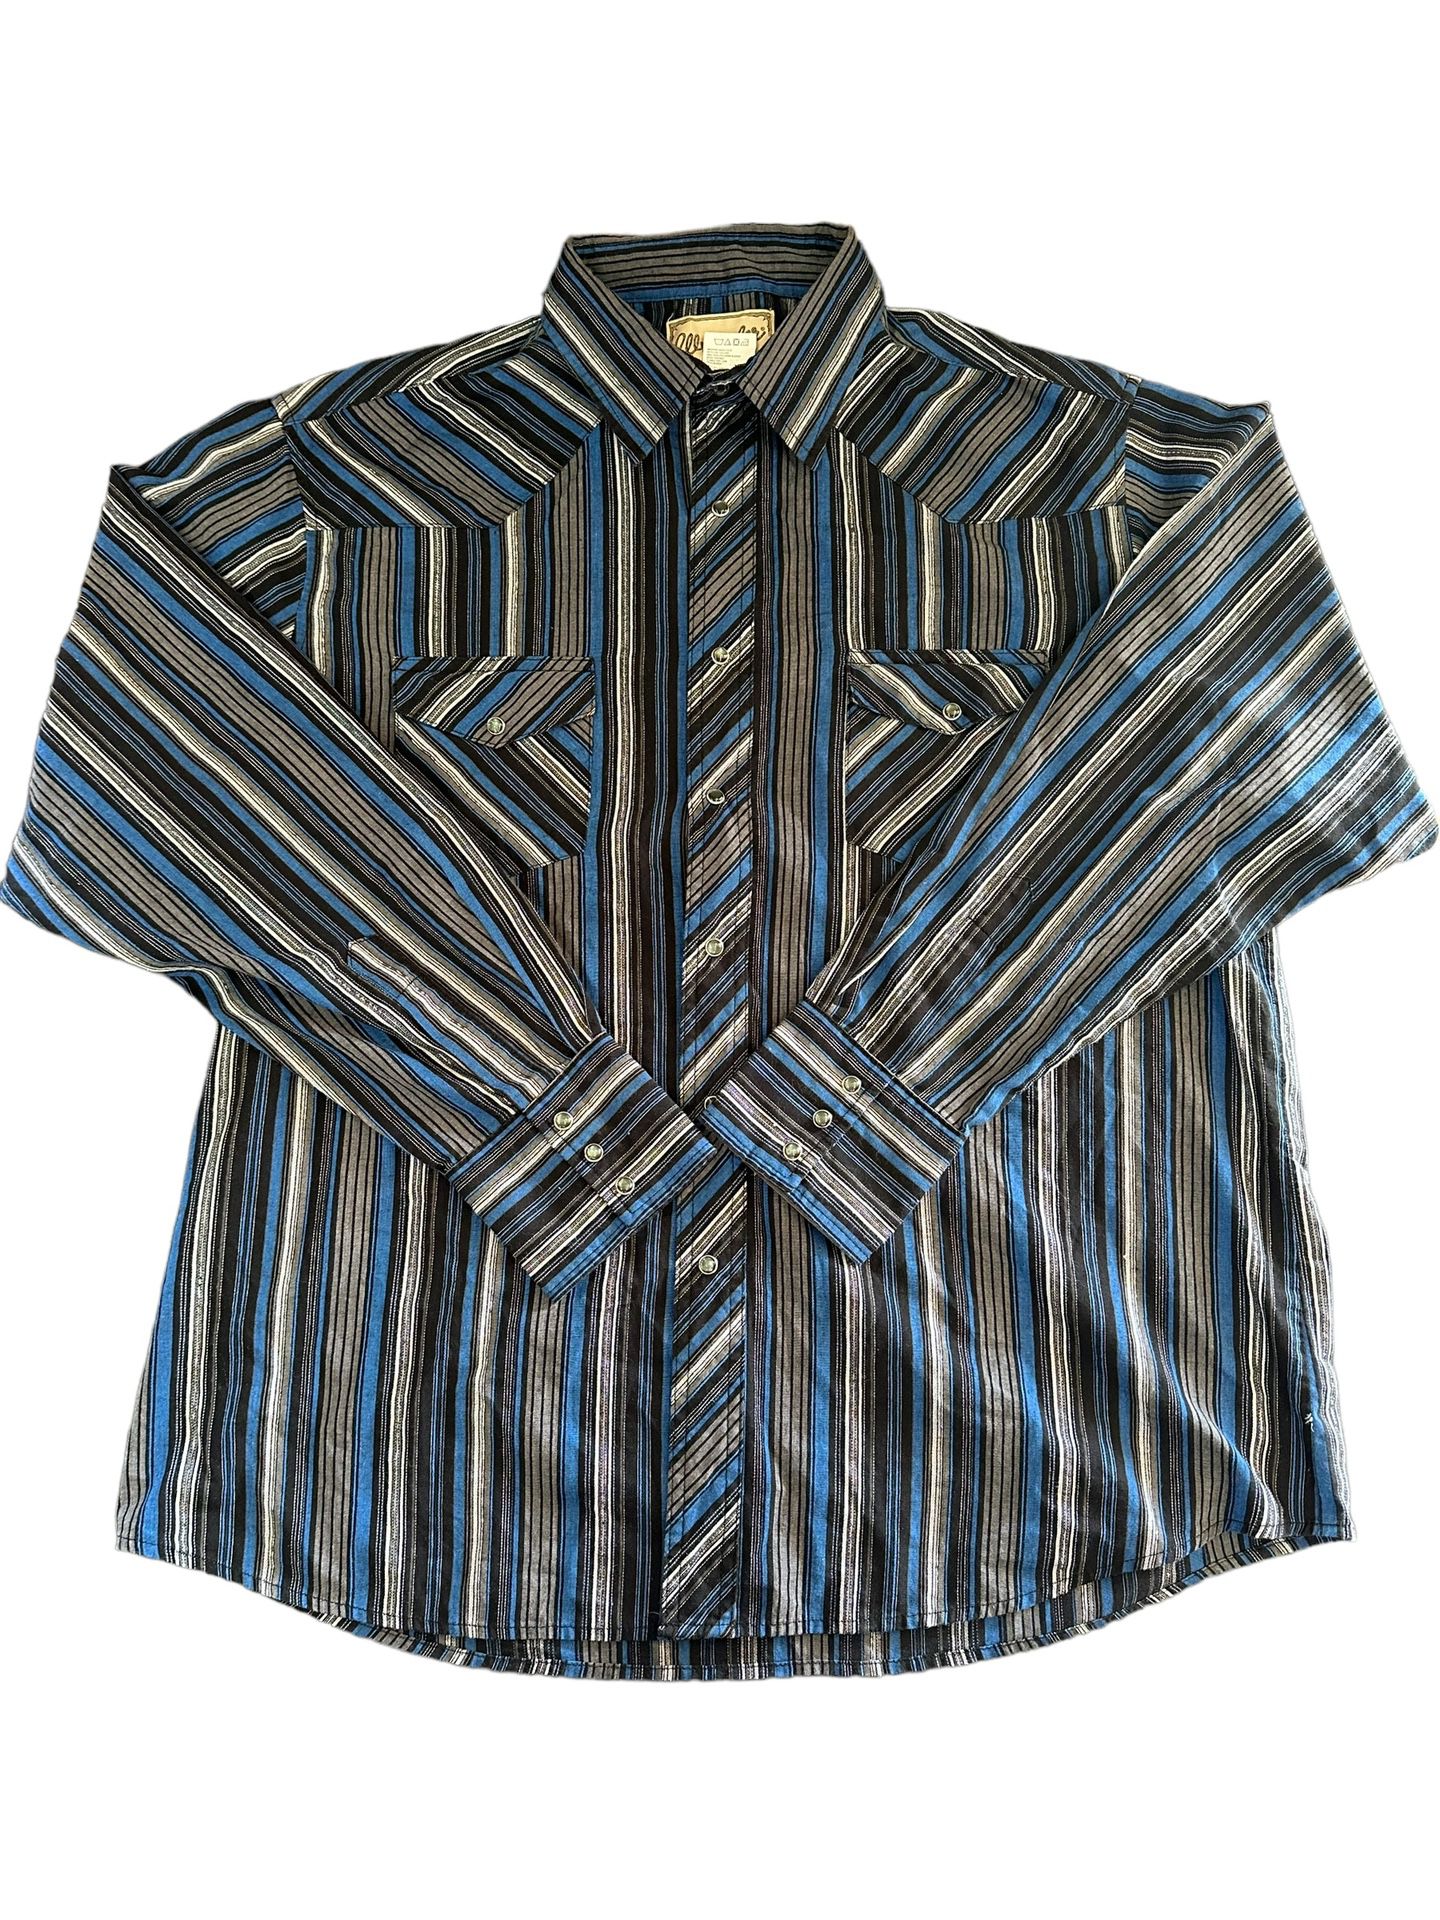 Wrangler Western Fashion Pearl Snap Shirt Mens XL Shiny Multistripe Long Sleeve